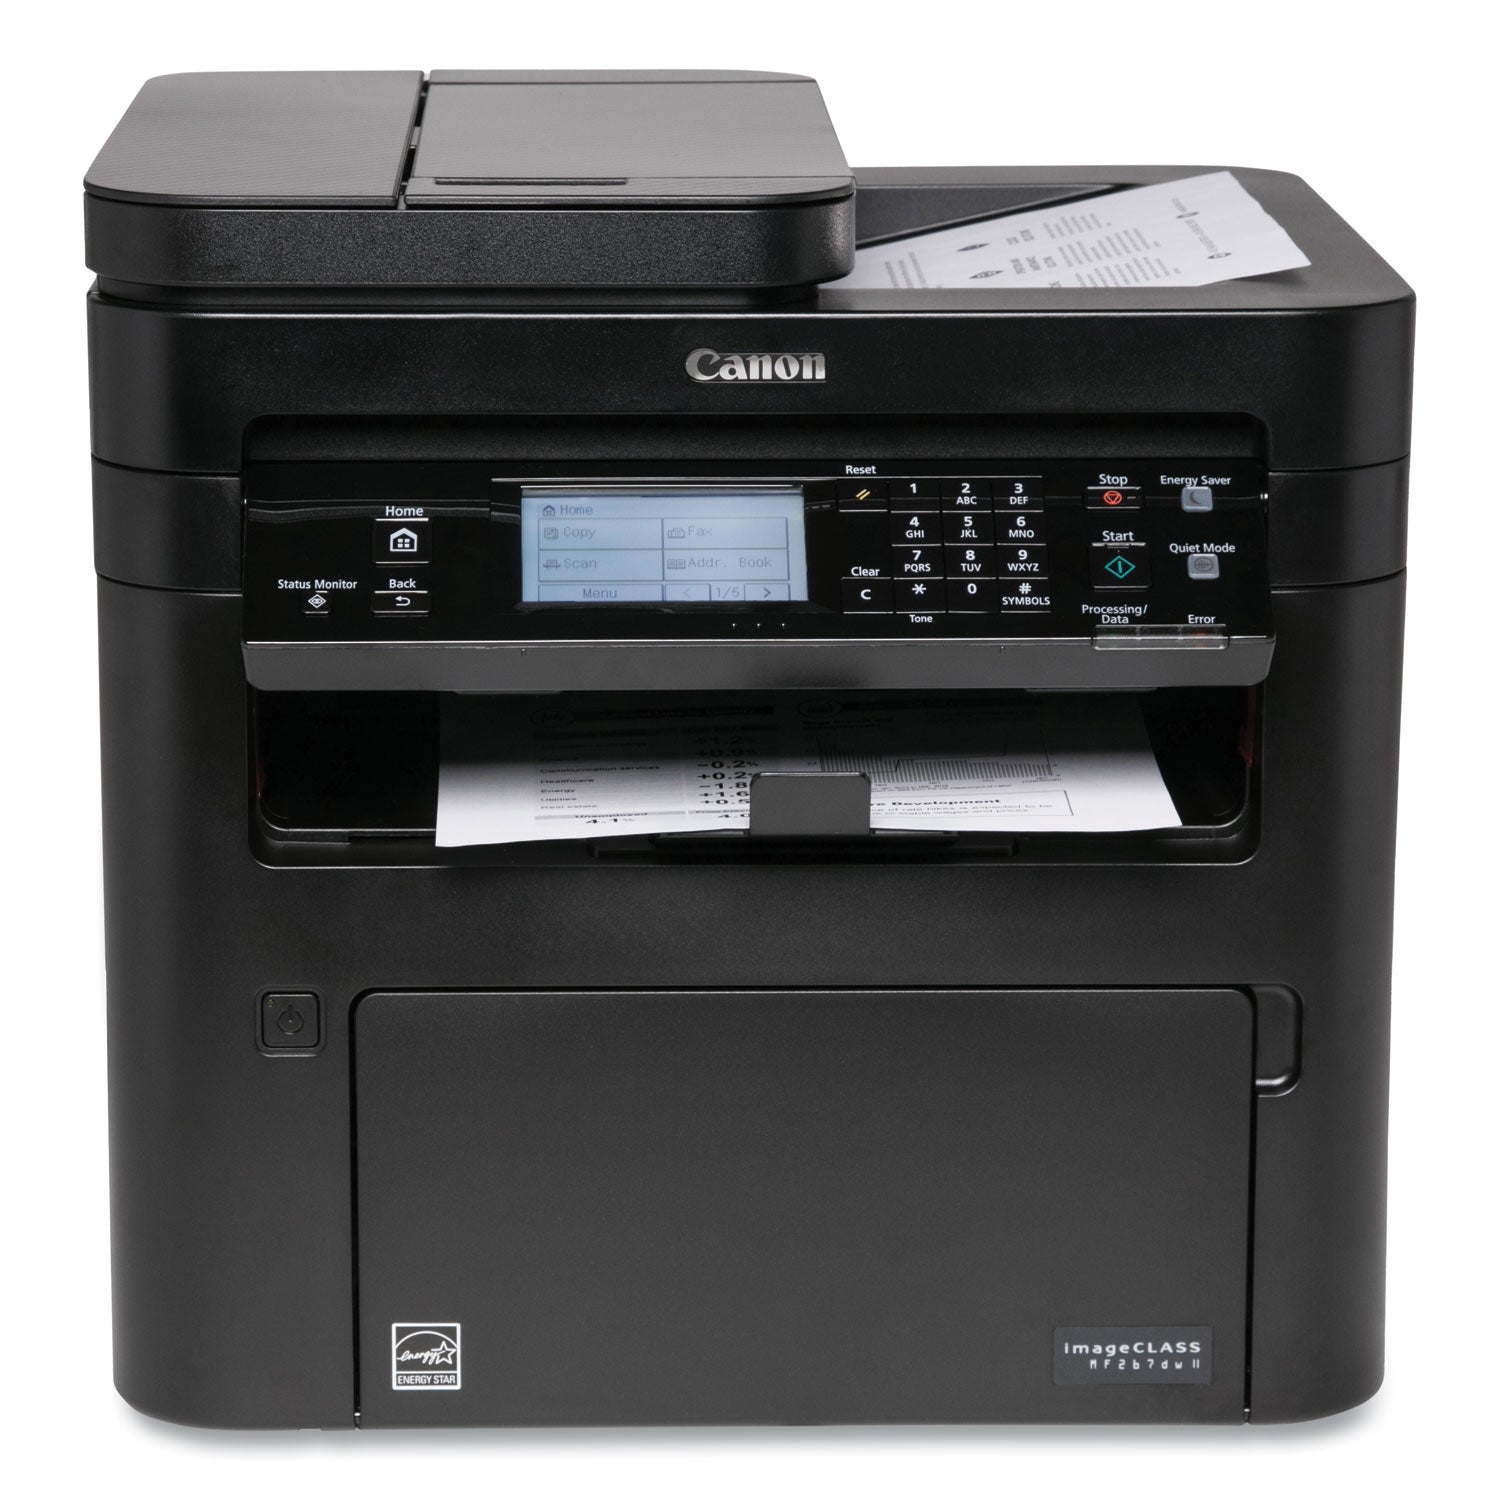 imageclass-mf267dw-ii-wireless-multifunction-laser-printer-copy-fax-print-scan_cnm5938c010 - 1